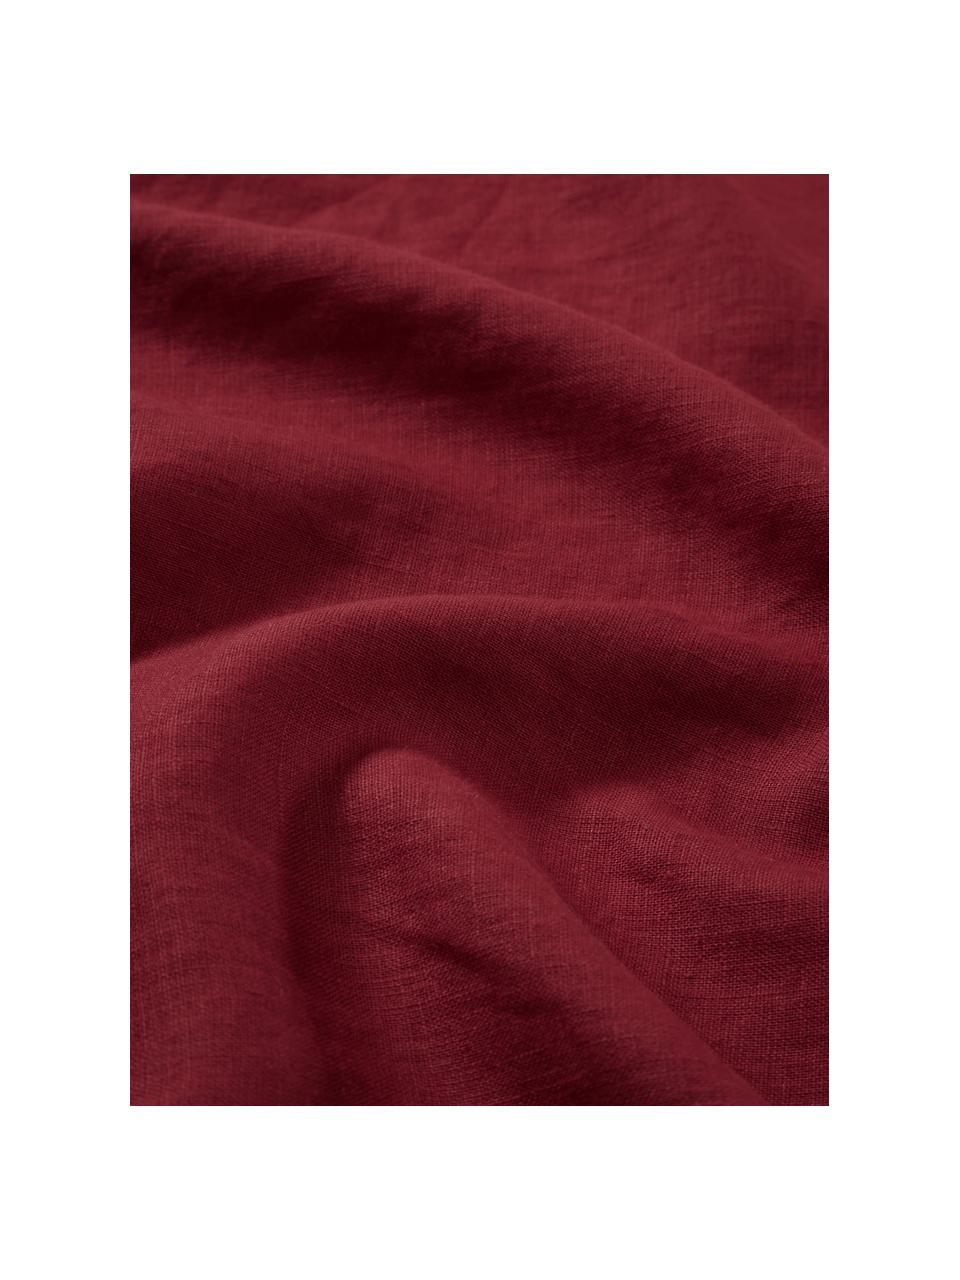 Serwetka z lnu Pembroke, 2 szt., 100% len, Czerwony, S 42 x D 42 cm